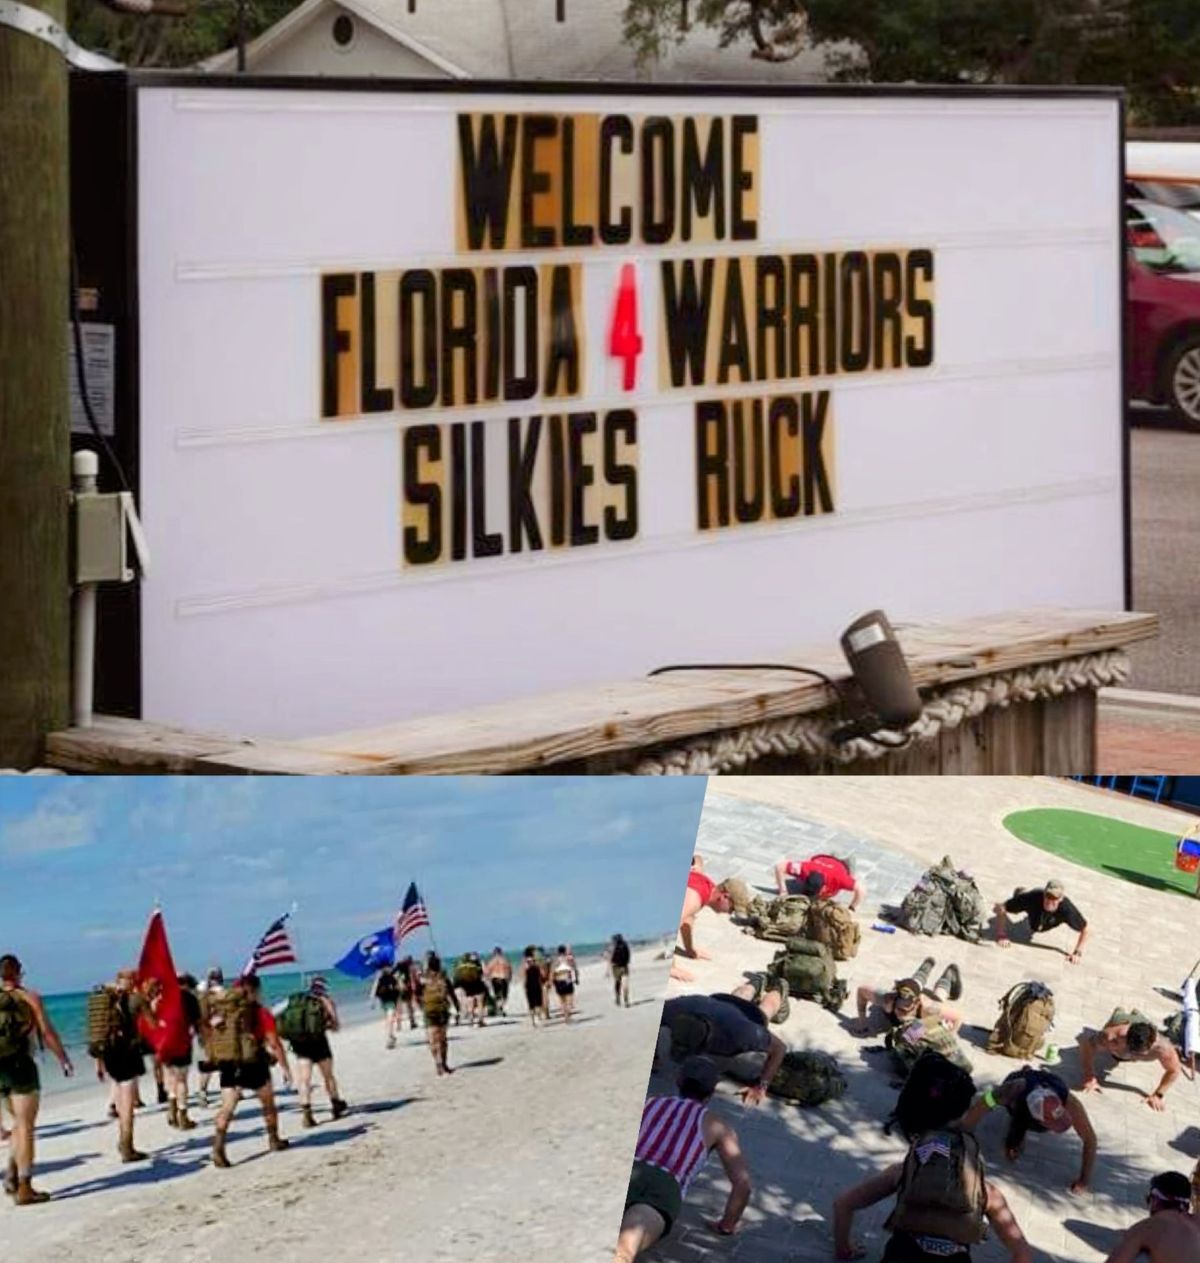 Florida4warriors Destin Fort Walton Beach Silkies Ruck  